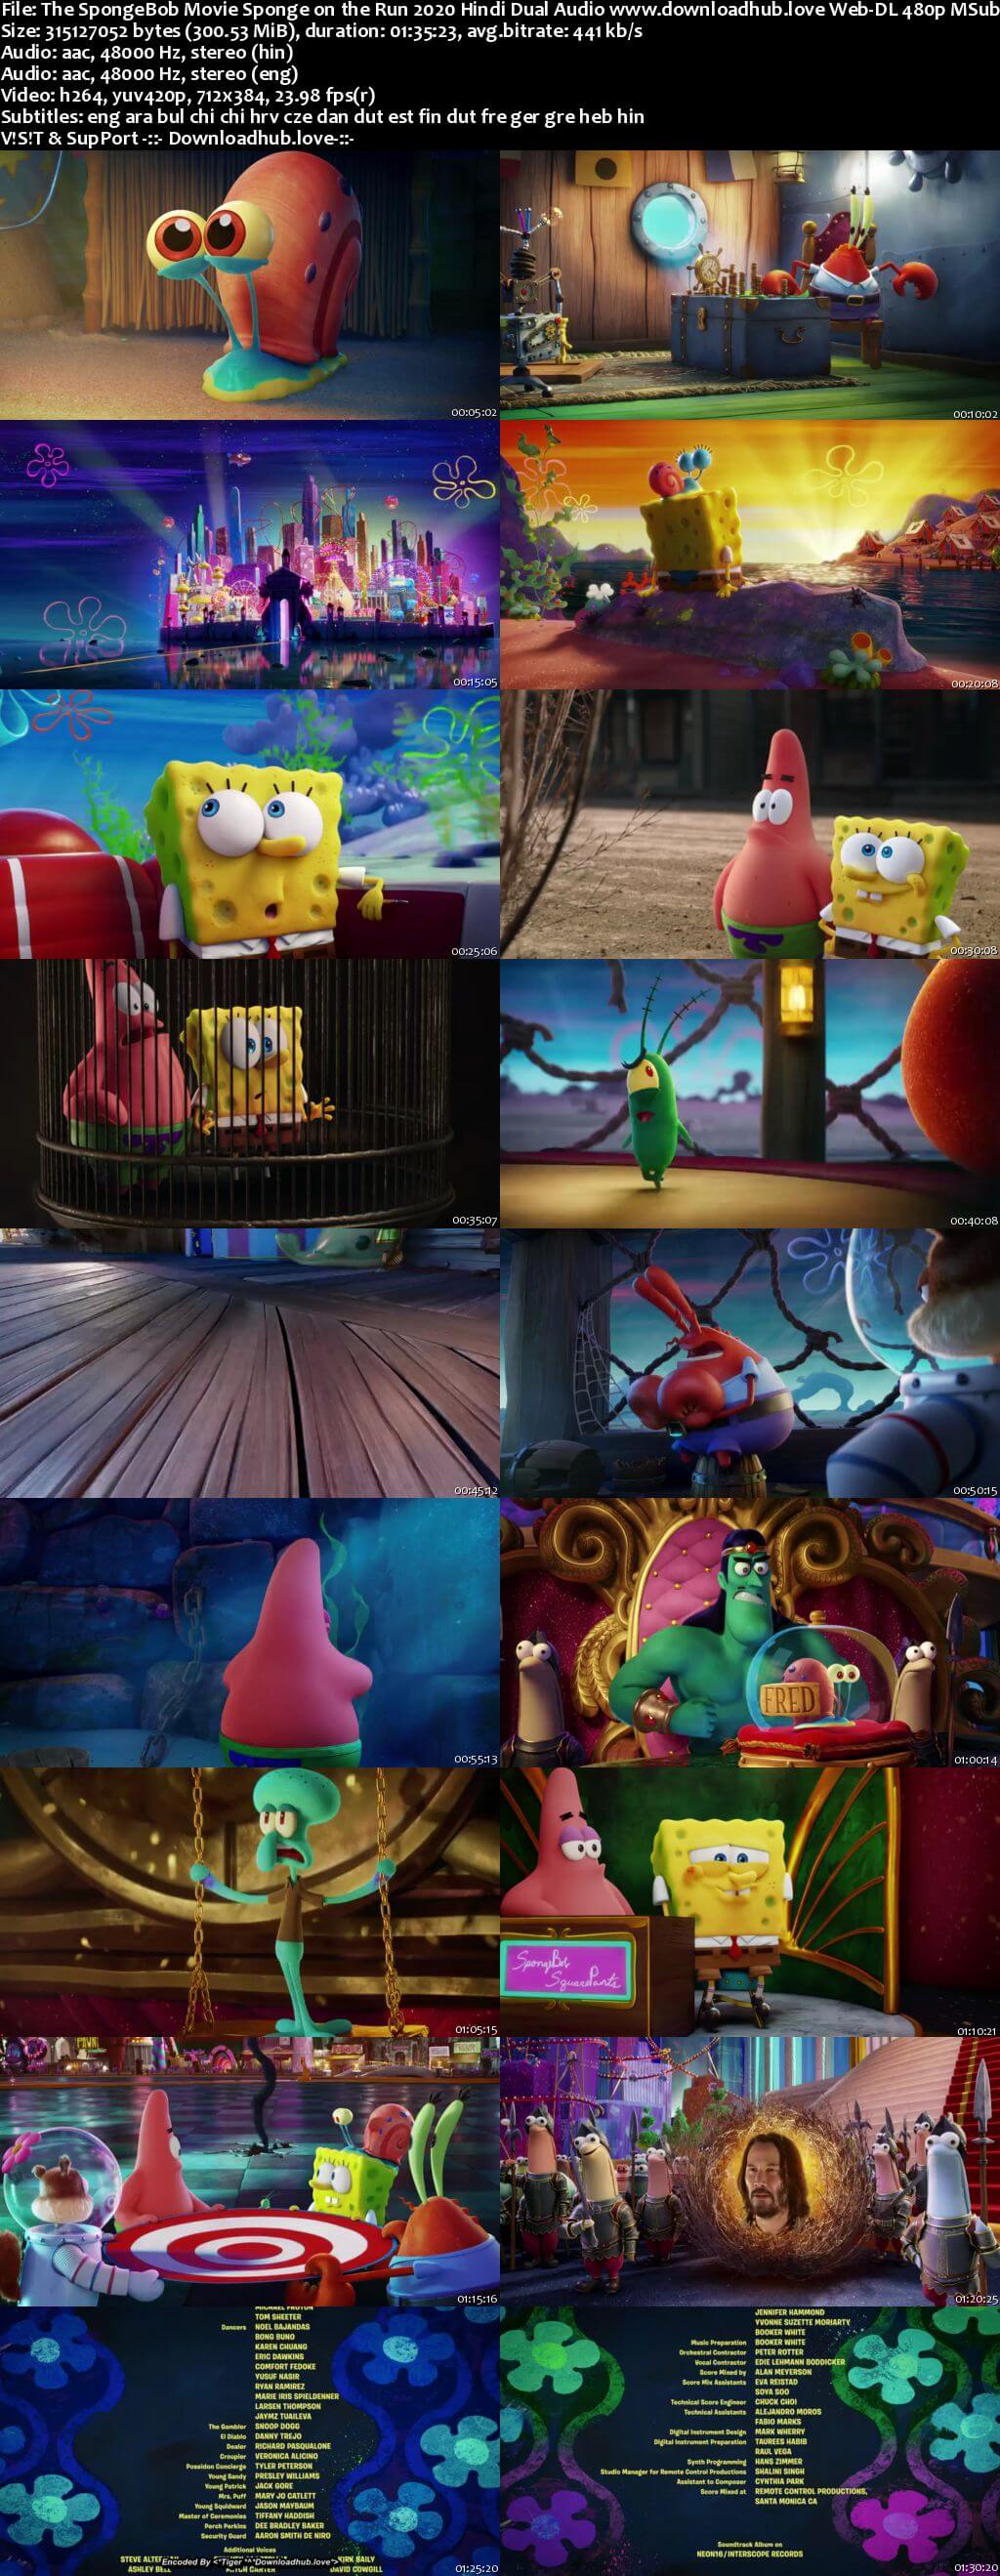 The SpongeBob Movie Sponge on the Run 2020 Hindi Dual Audio 300MB Web-DL 480p MSubs